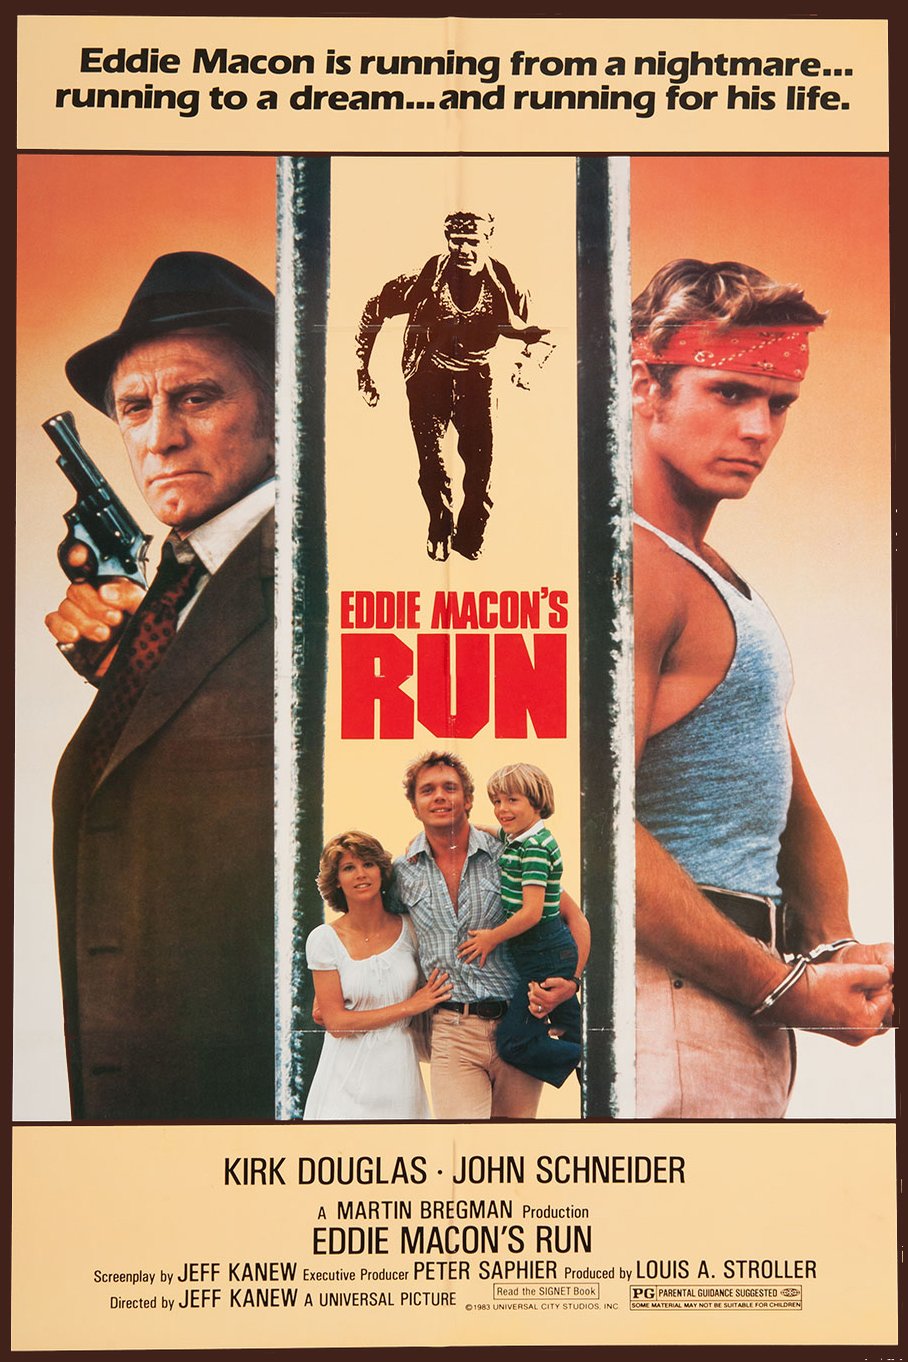 Poster of the movie Eddie Macon's Run